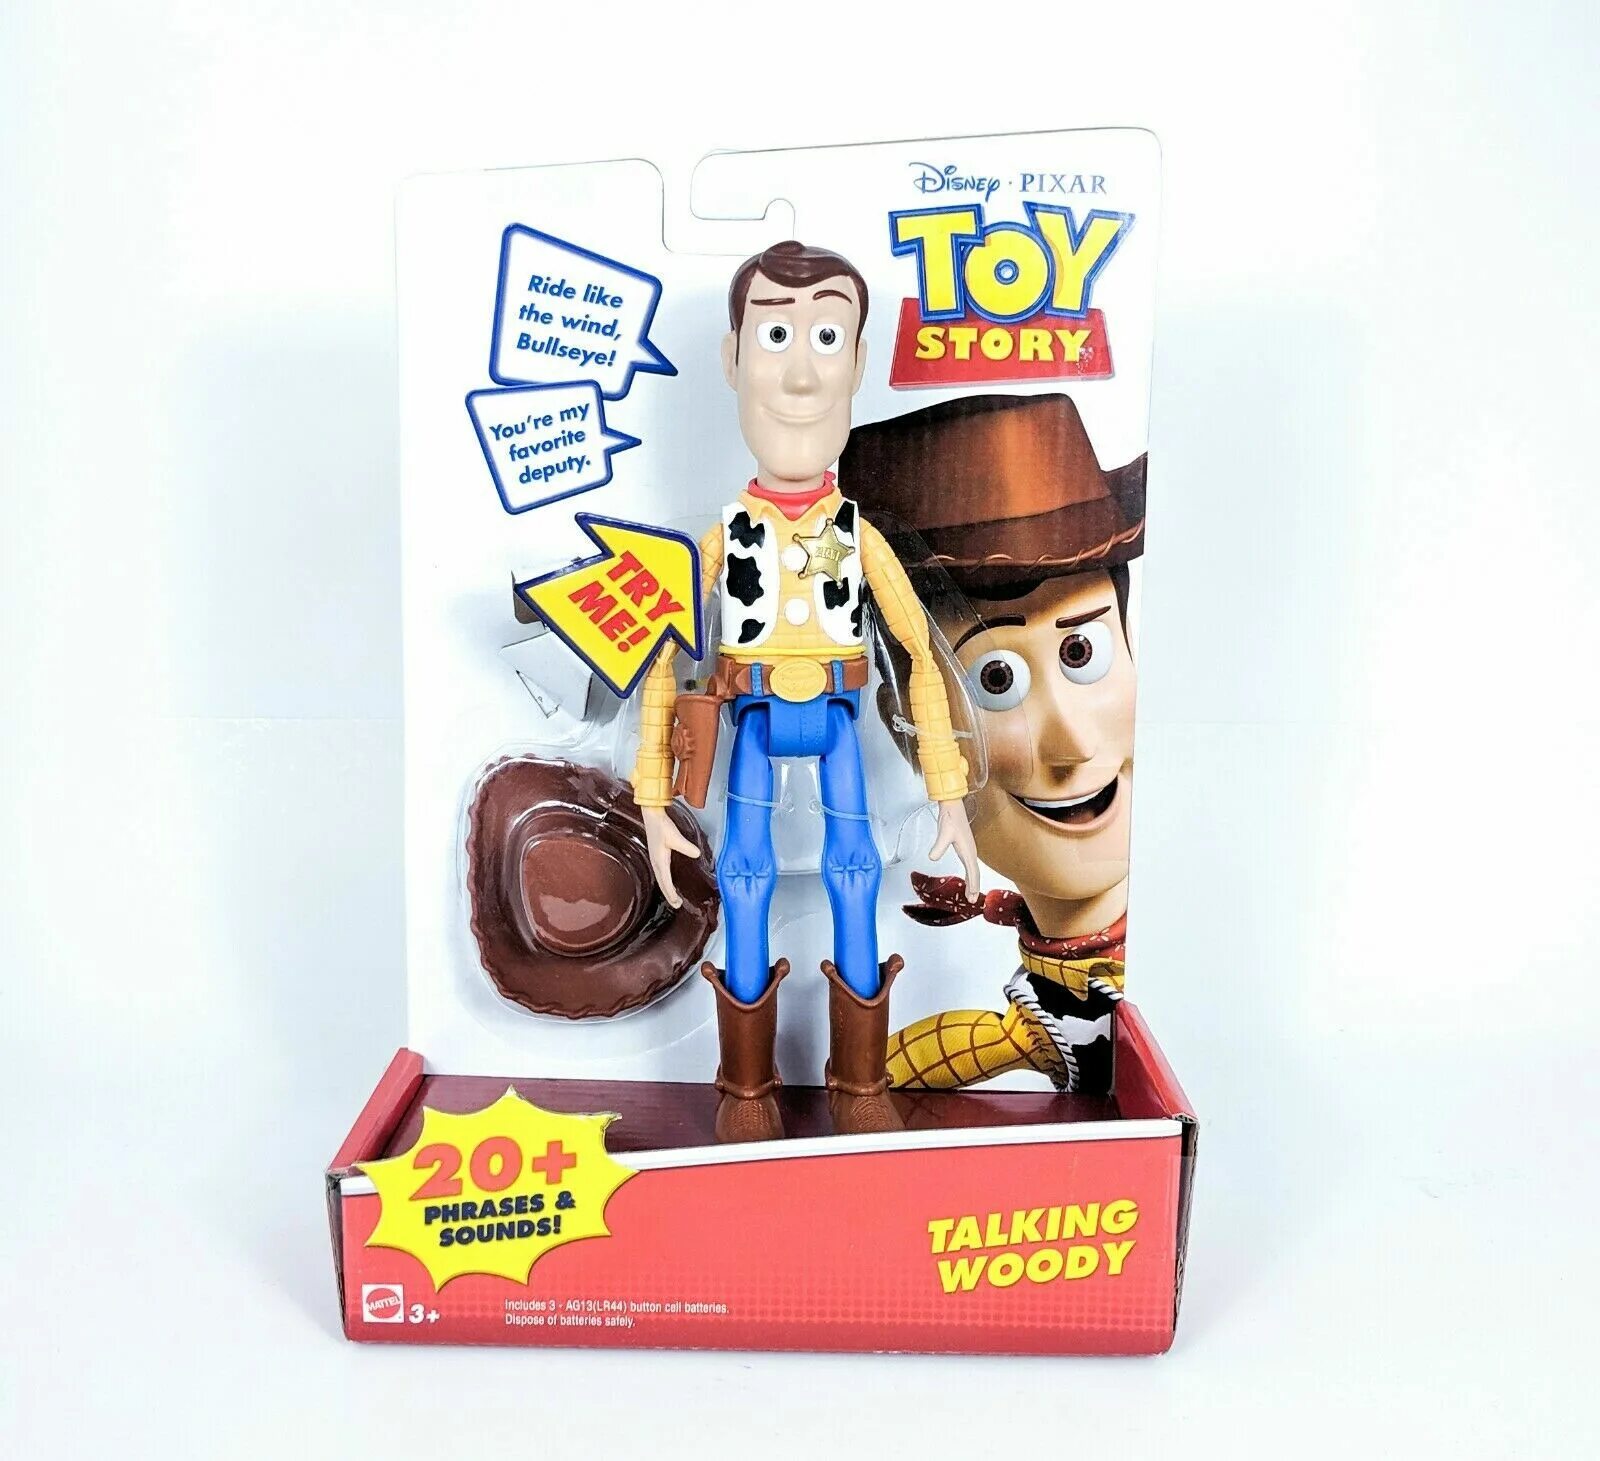 Toy story рекс Дисней стор. Woody and Buzz Toy. Базз и Вуди и РЭКС игрушки. Фигурка дио с головой Вуди. Toy talk